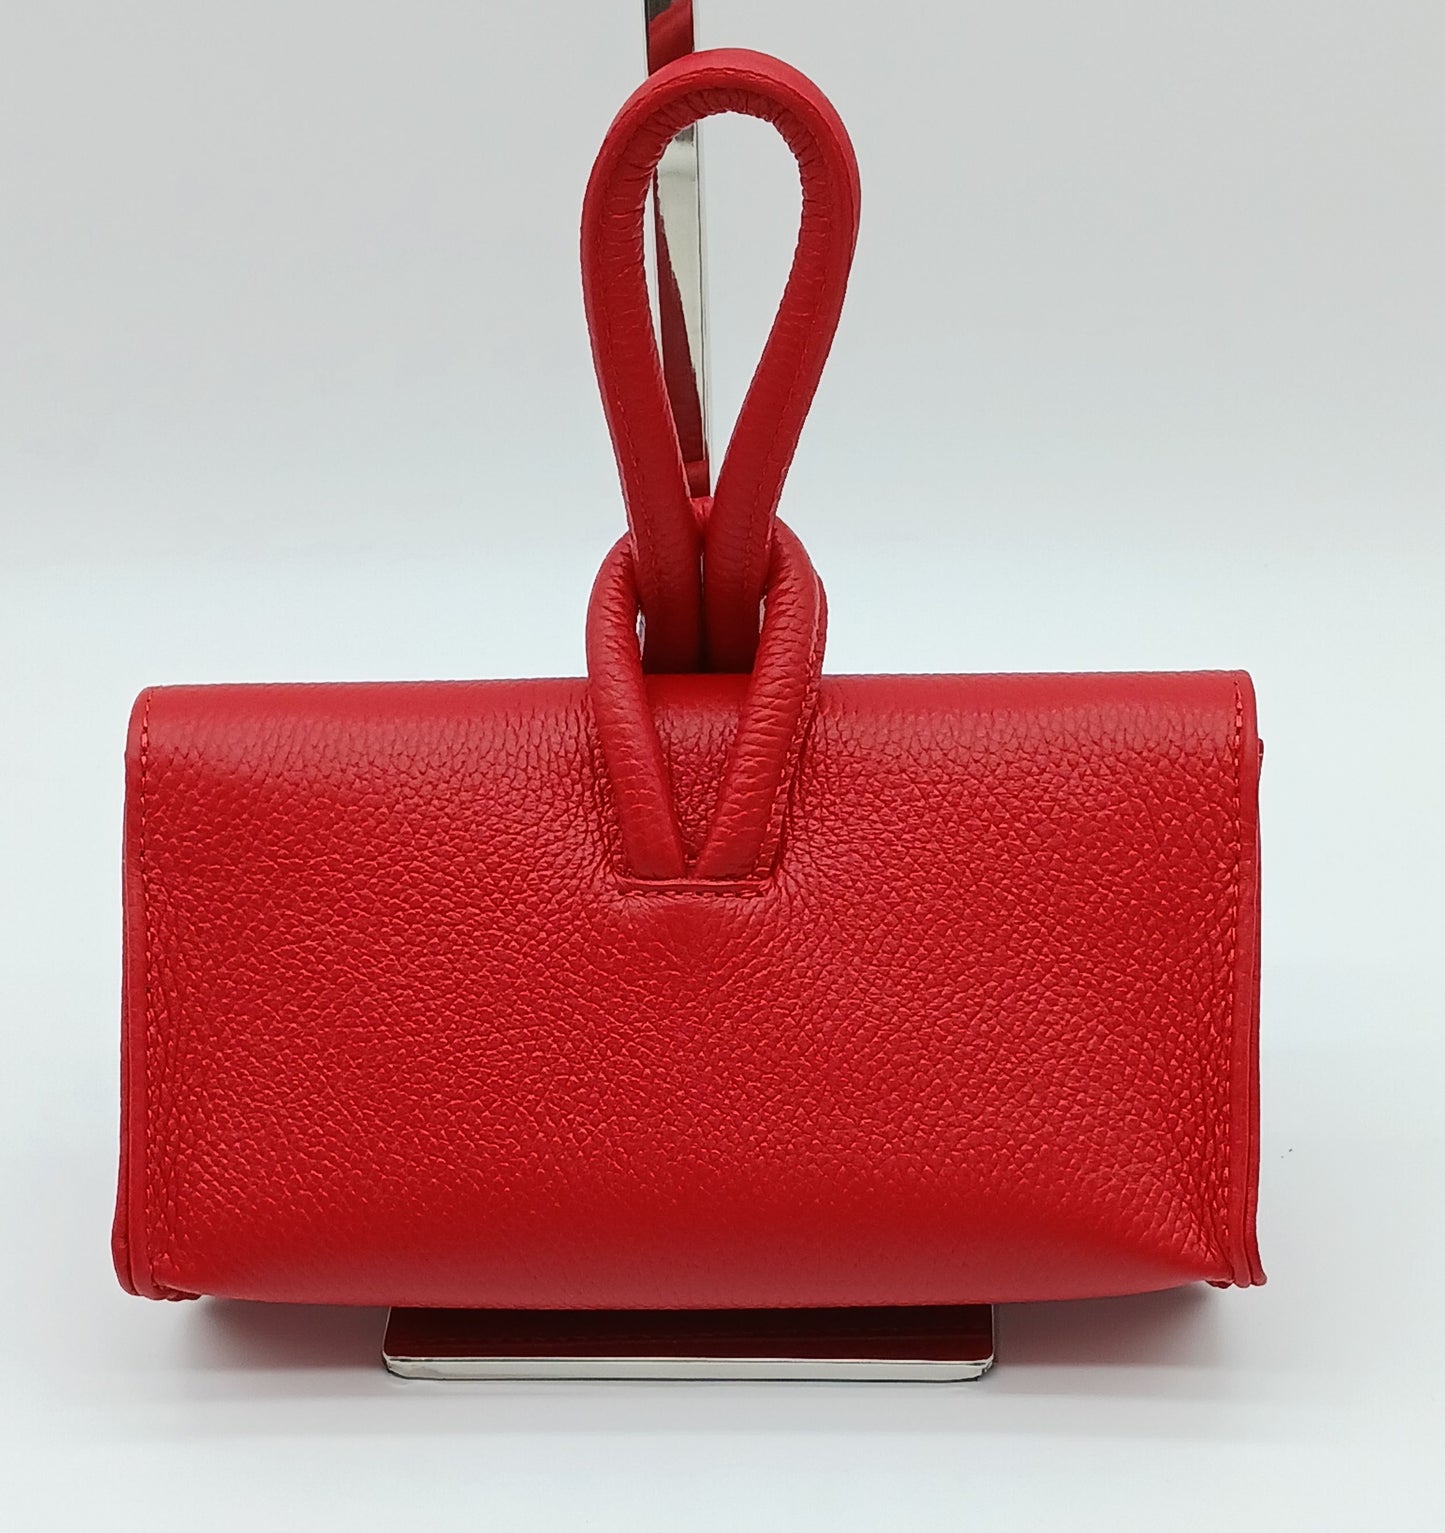 Genuine Pebble Leather Crossbody Handbag - Red – Made In Italy - DumasvilleBoutique